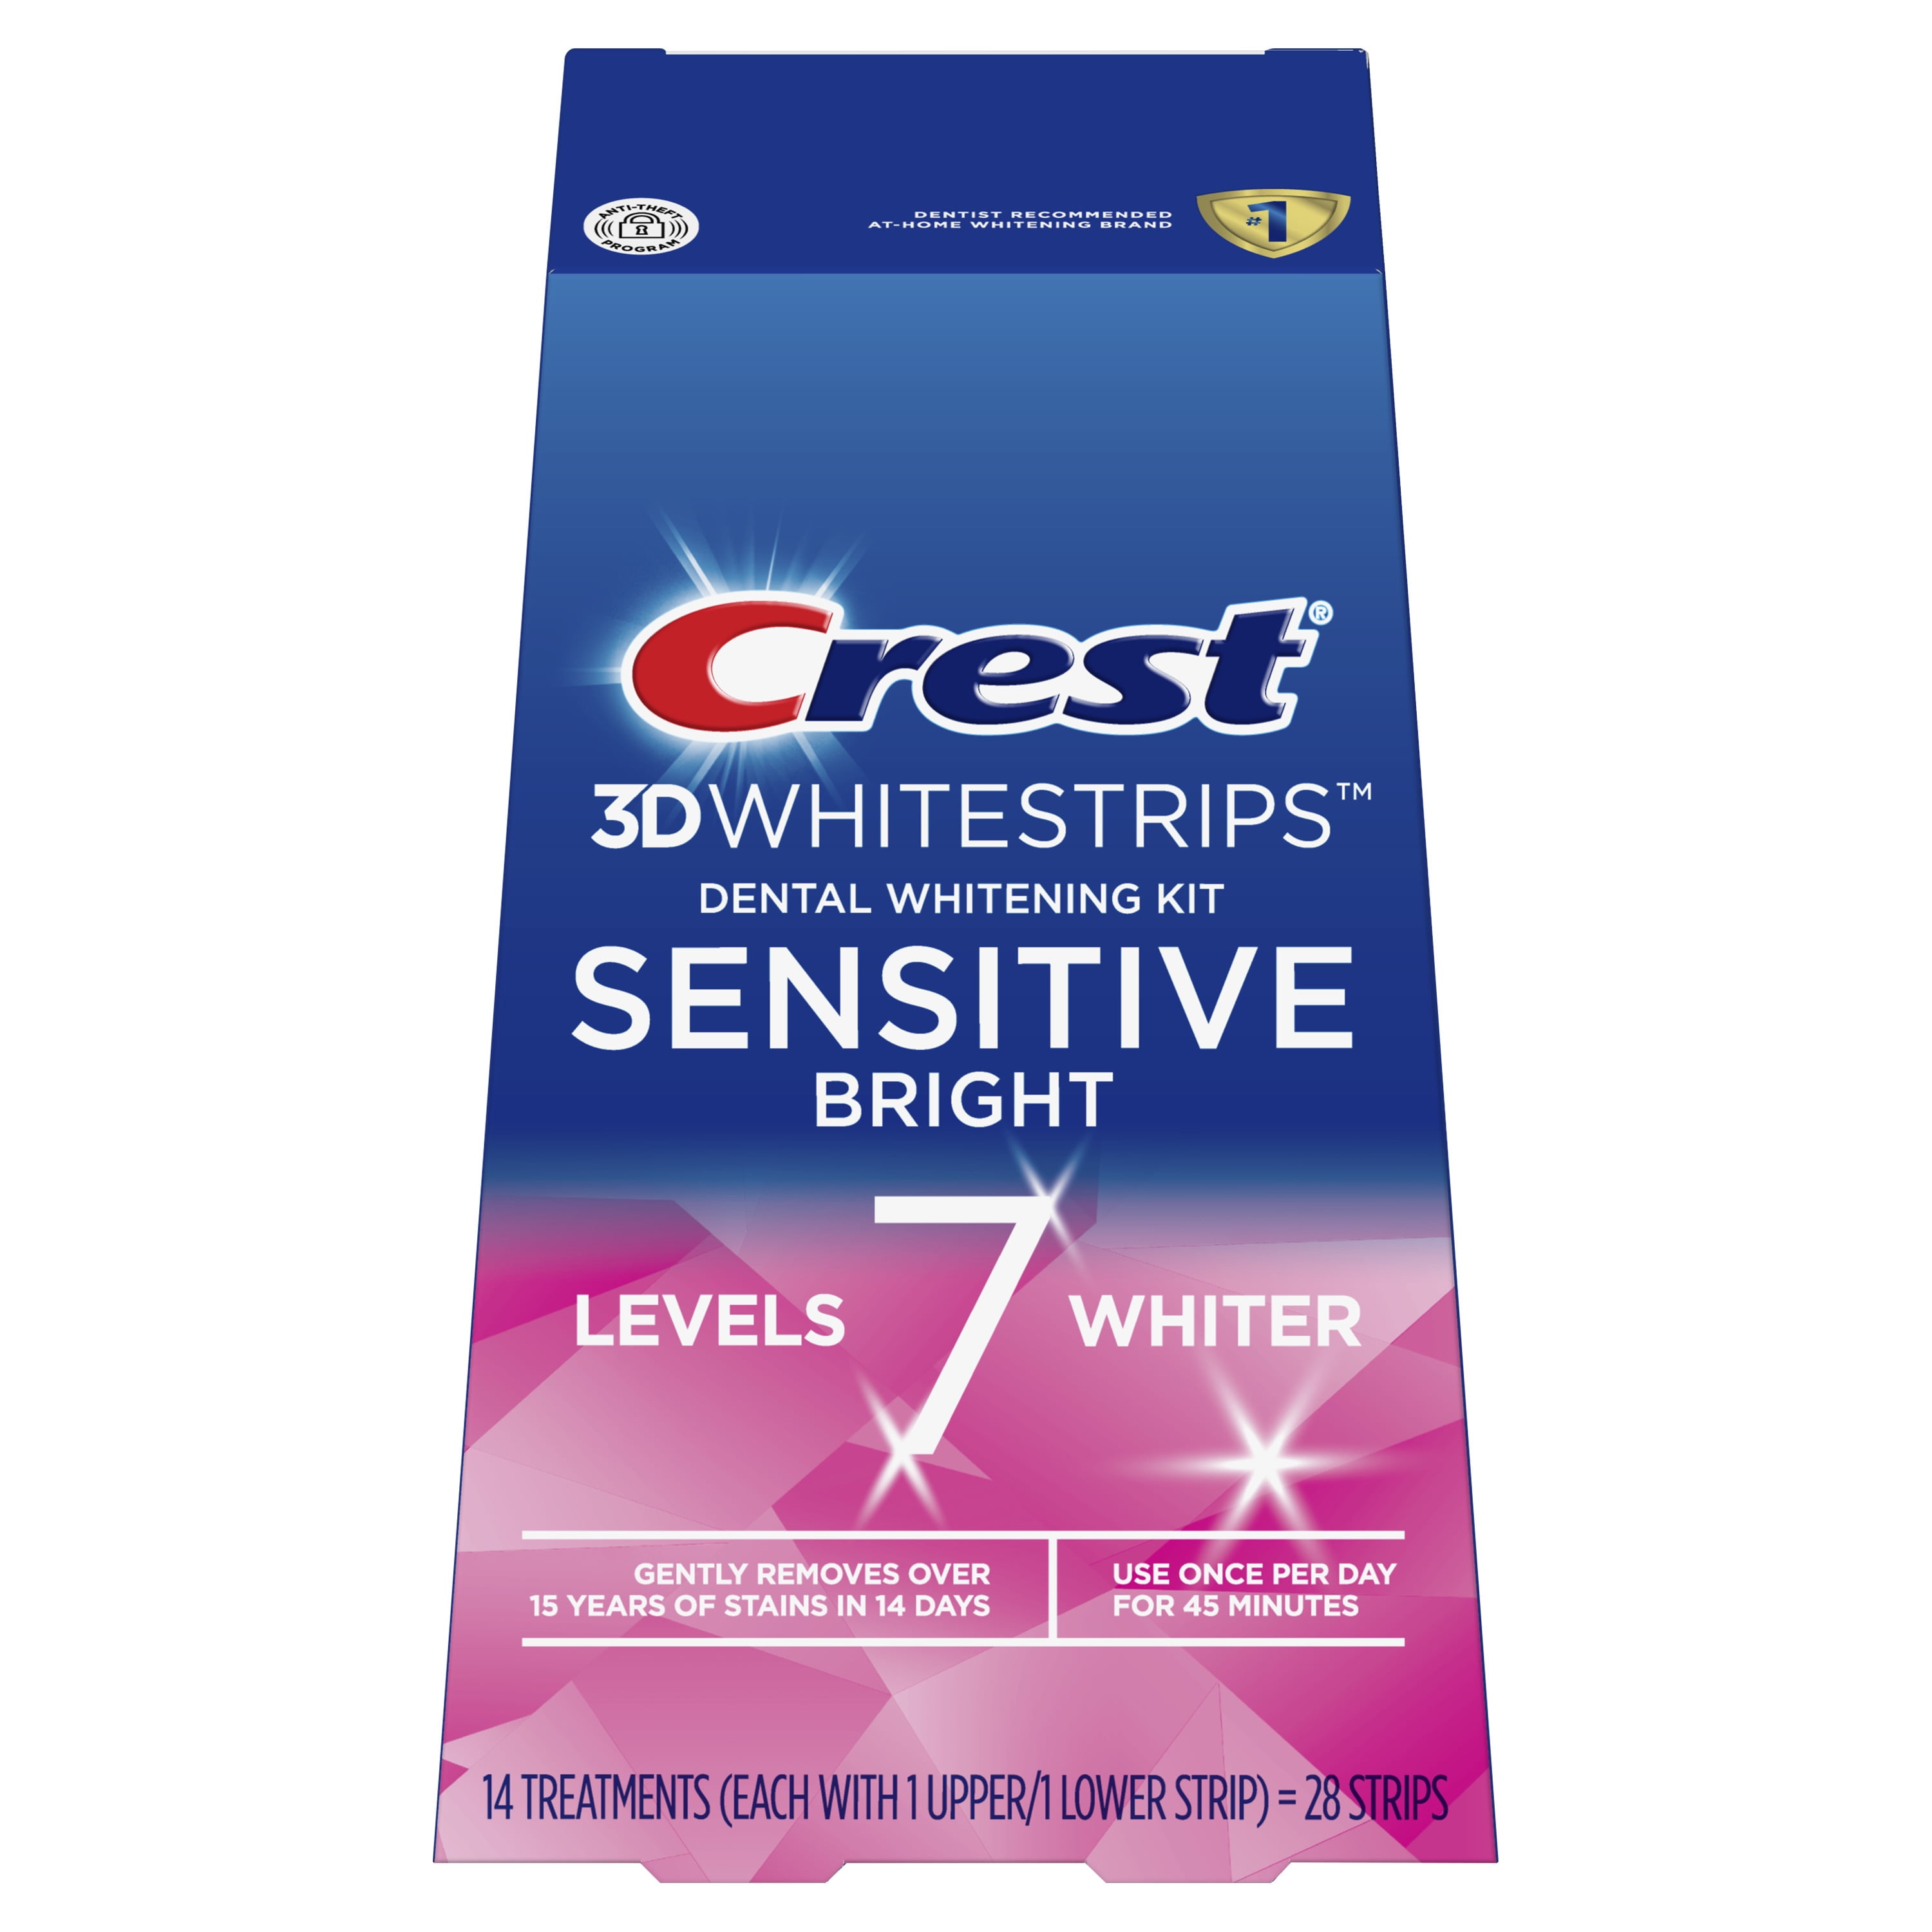 Crest 3DWhitestrips Sensitive Bright at-Home Teeth Whitening Strip Kit ...